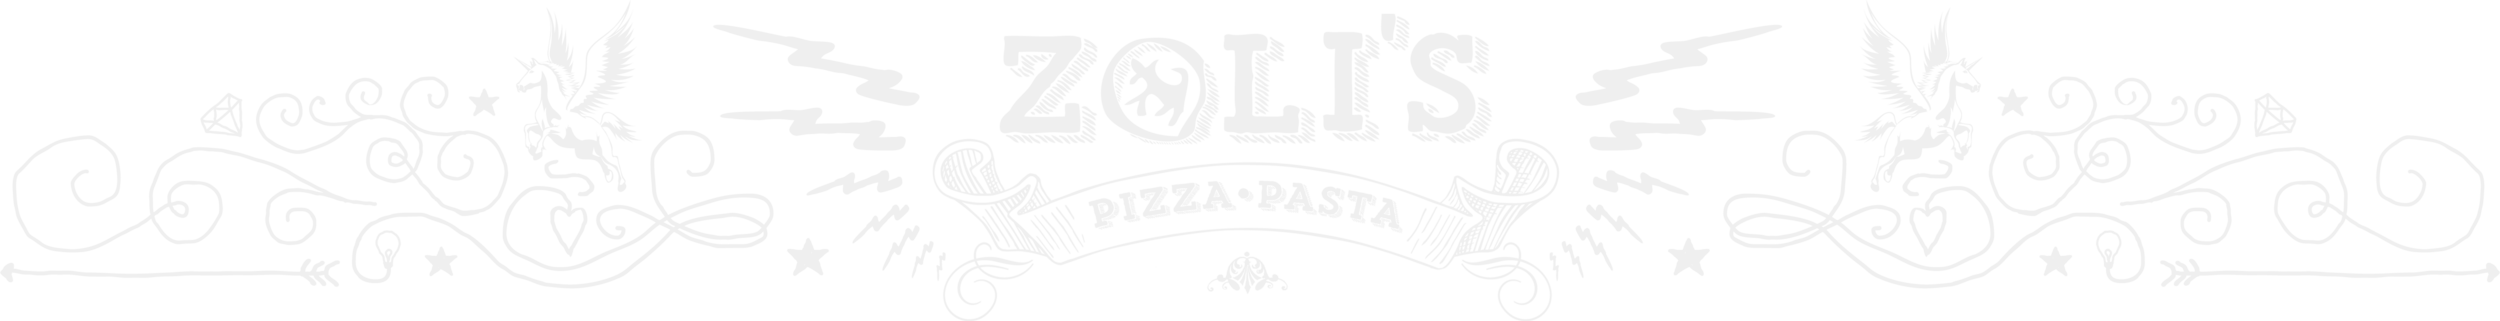 Zoli's Pizza Box Logo_full_white.png